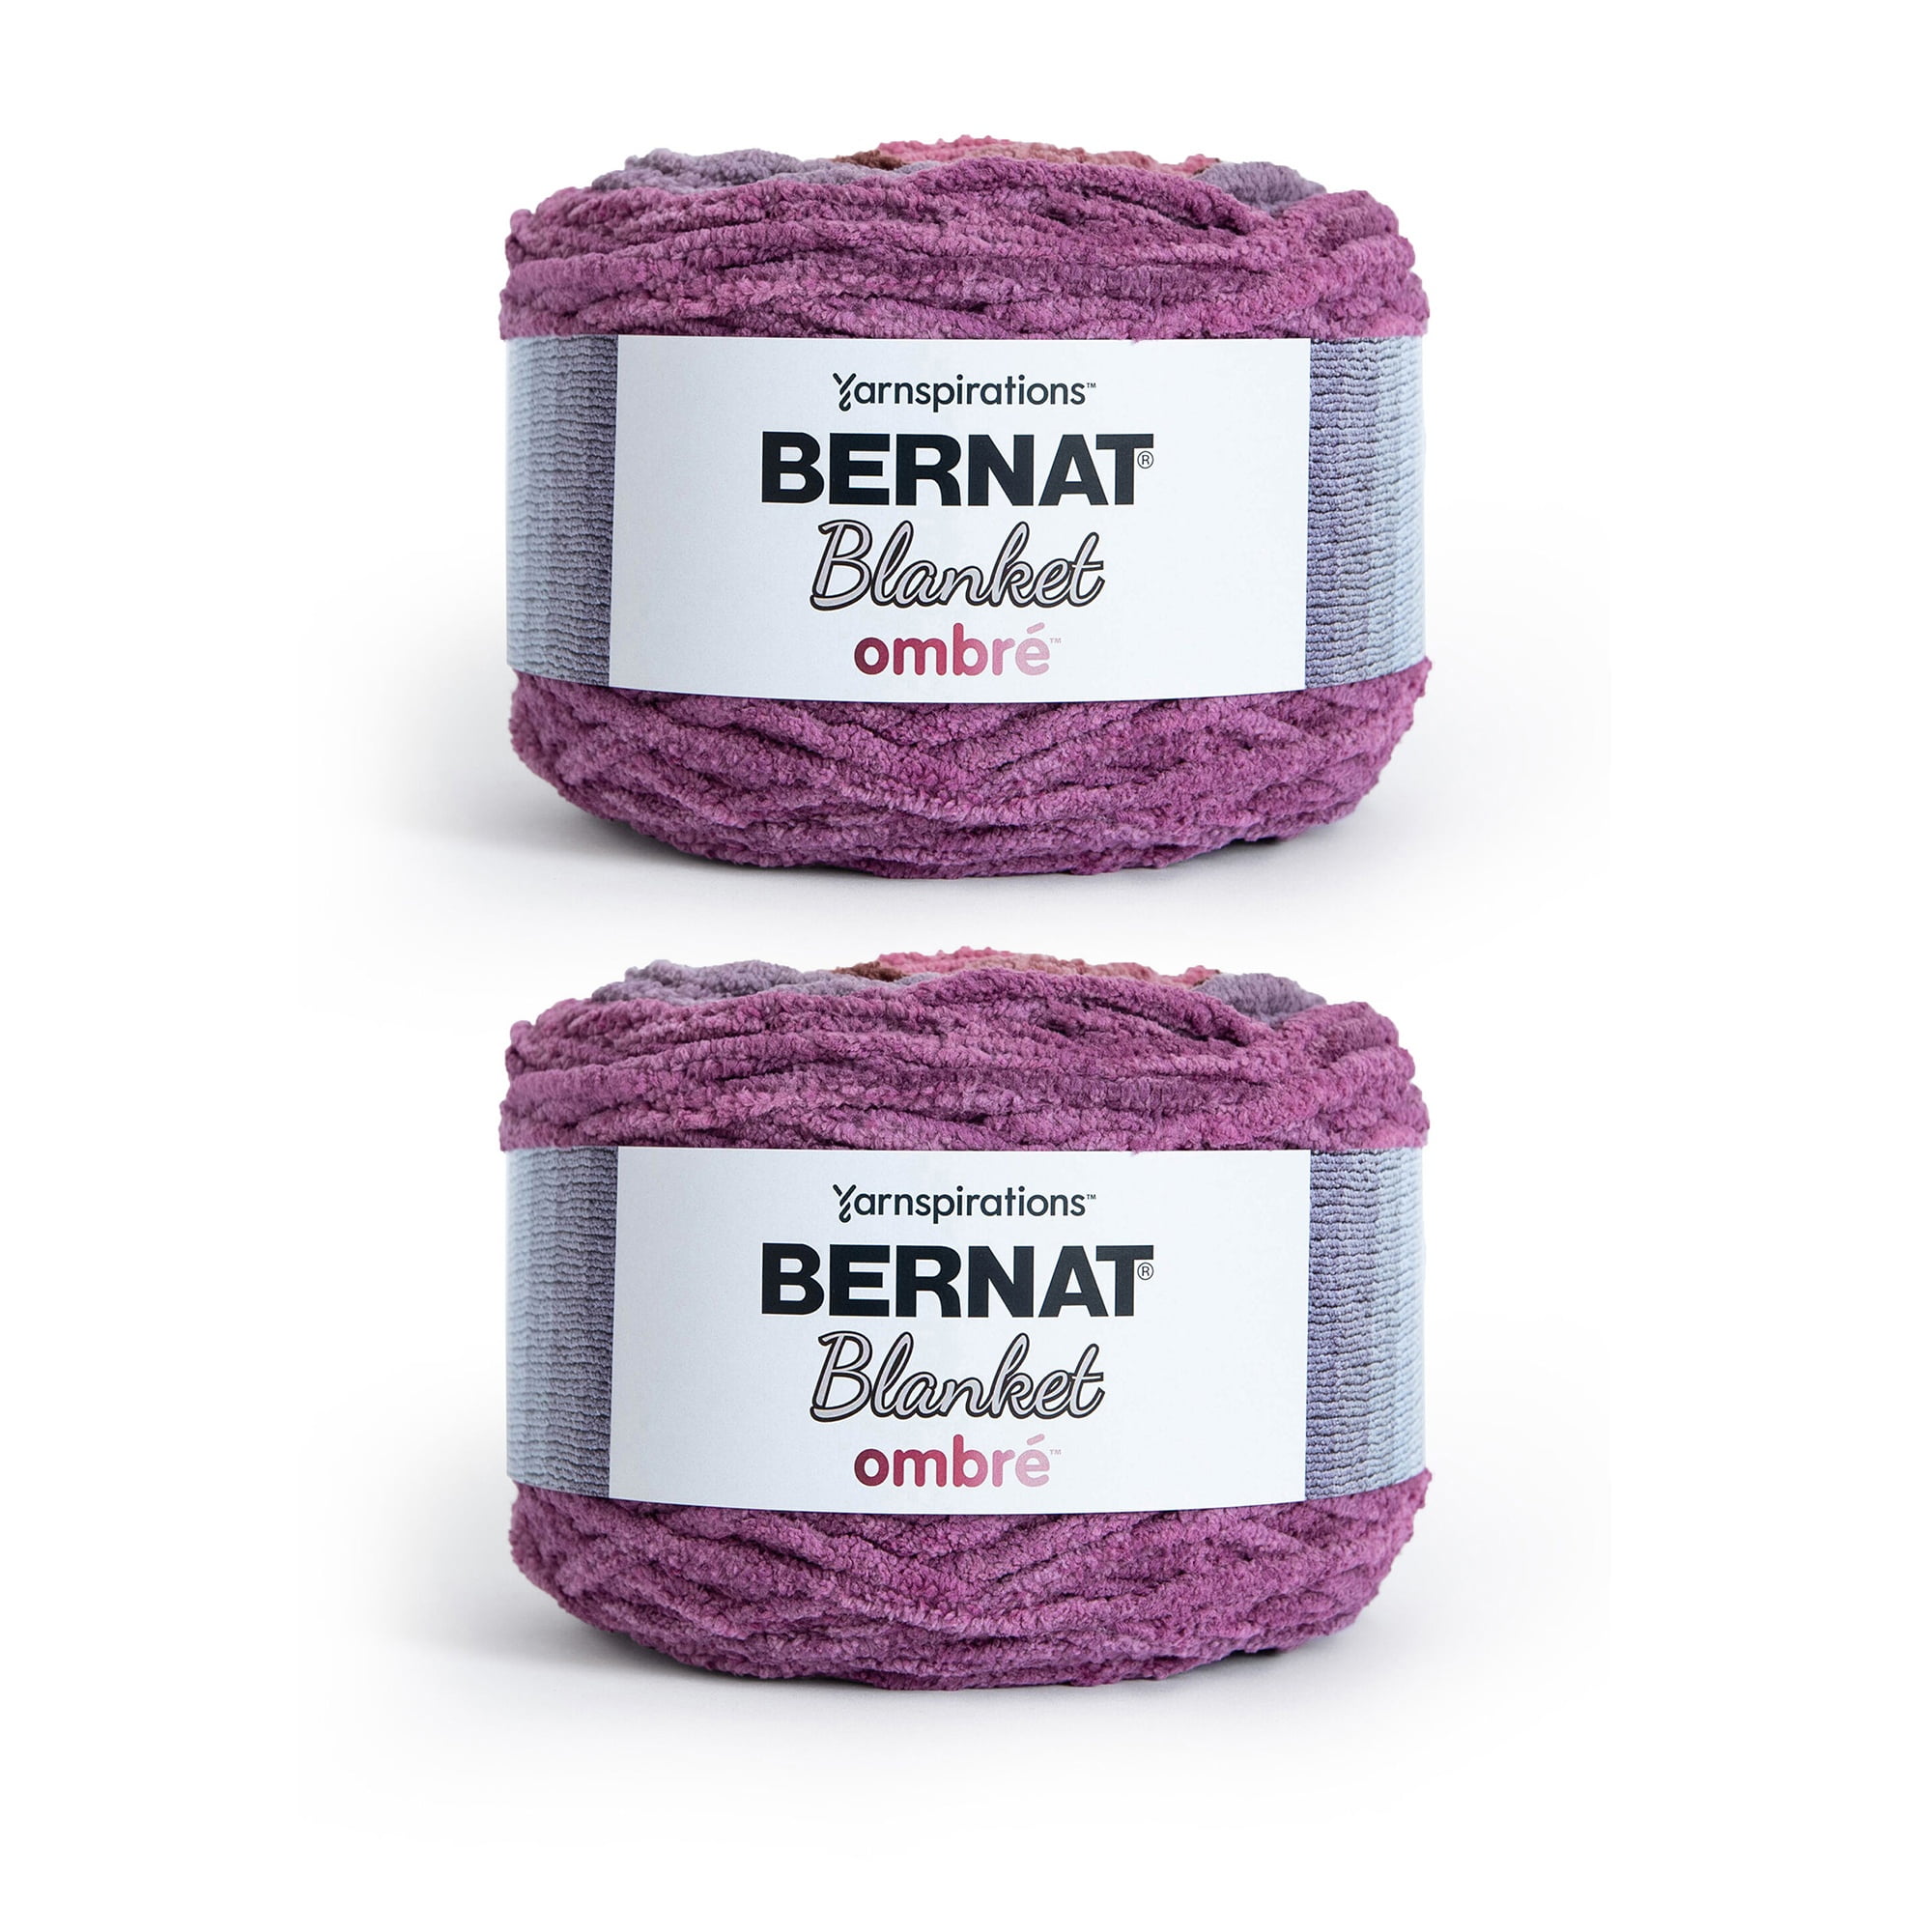 Bernat Blanket Ombre Yarn - NOTM587688